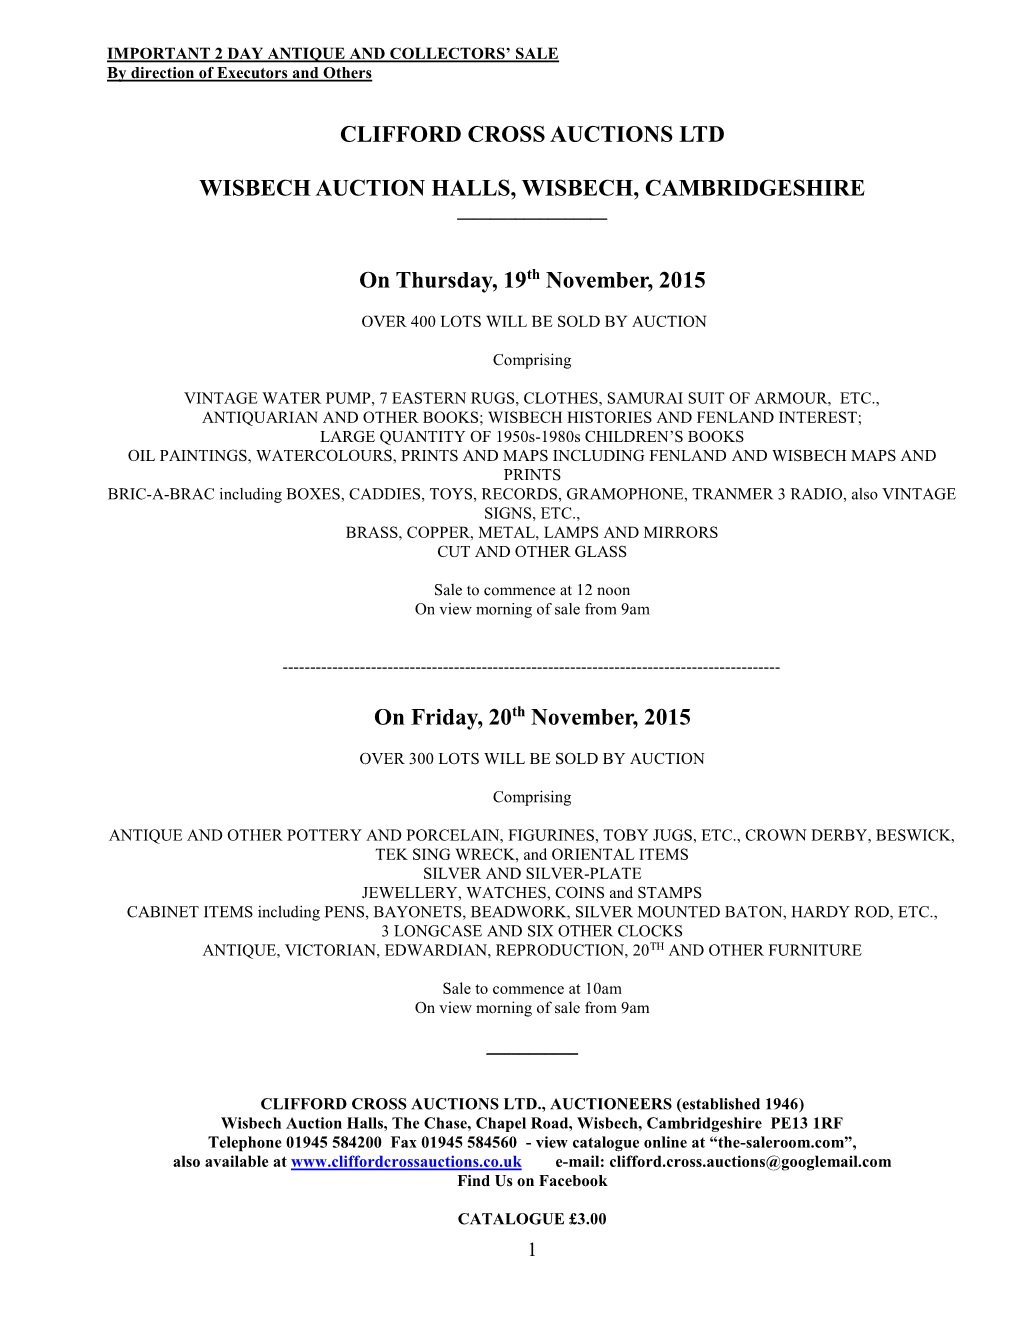 Clifford Cross Auctions Ltd Wisbech Auction Halls